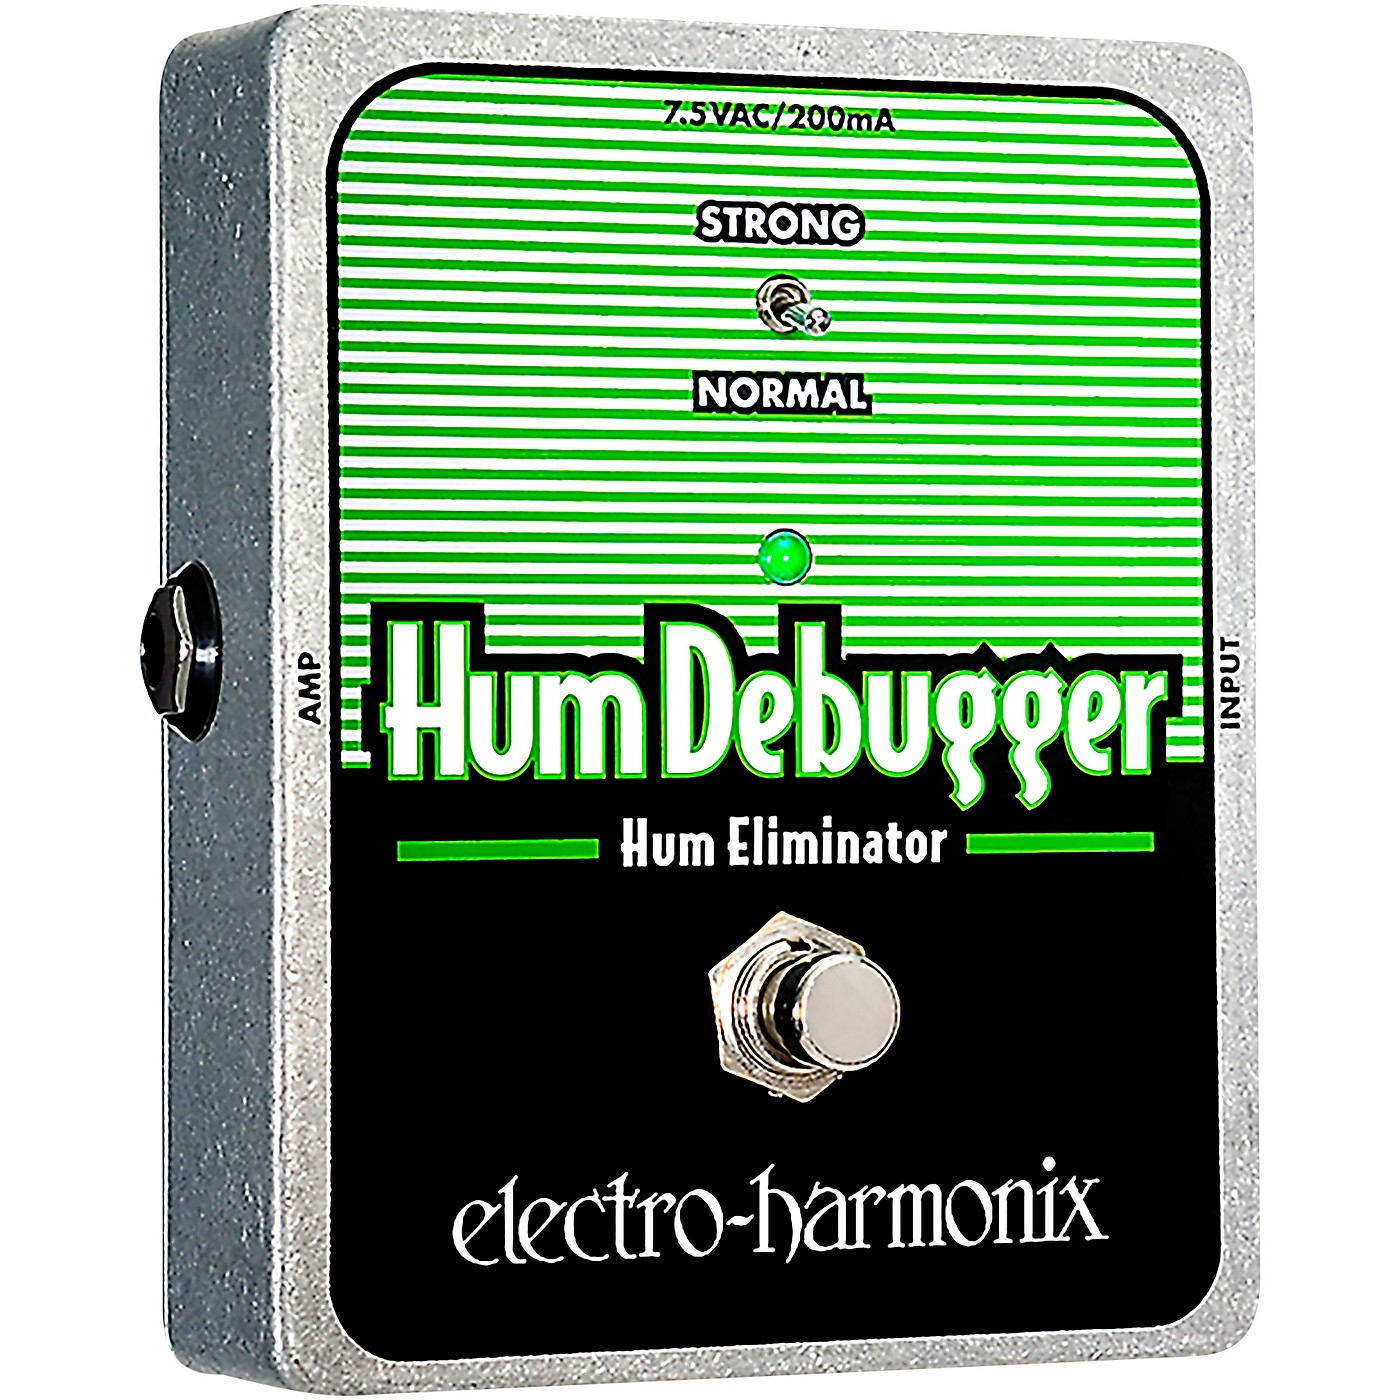 Electro-Harmonix XO Hum Debugger Hum Eliminator Guitar Effects Pedal thumbnail